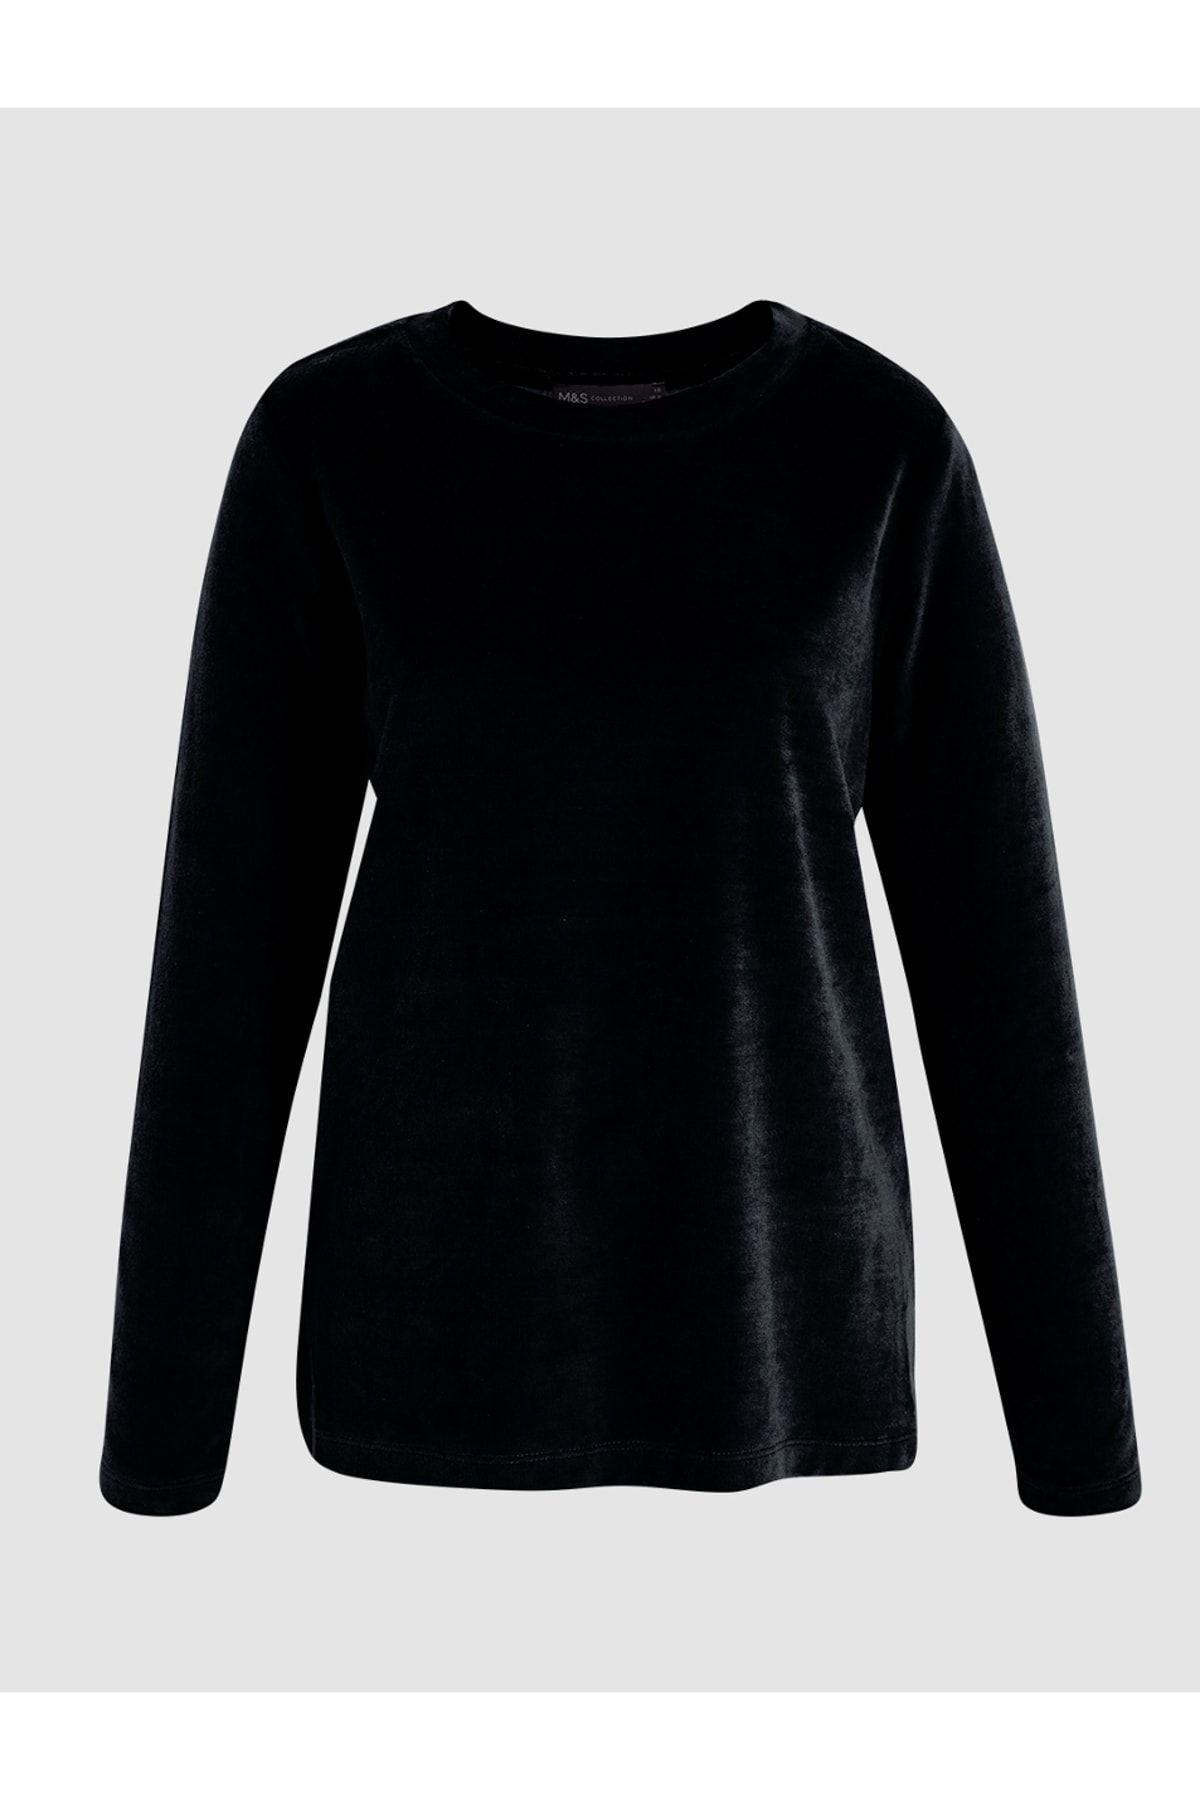 Marks & Spencer Kadın Siyah Uzun Kollu T-Shirt T41006461X